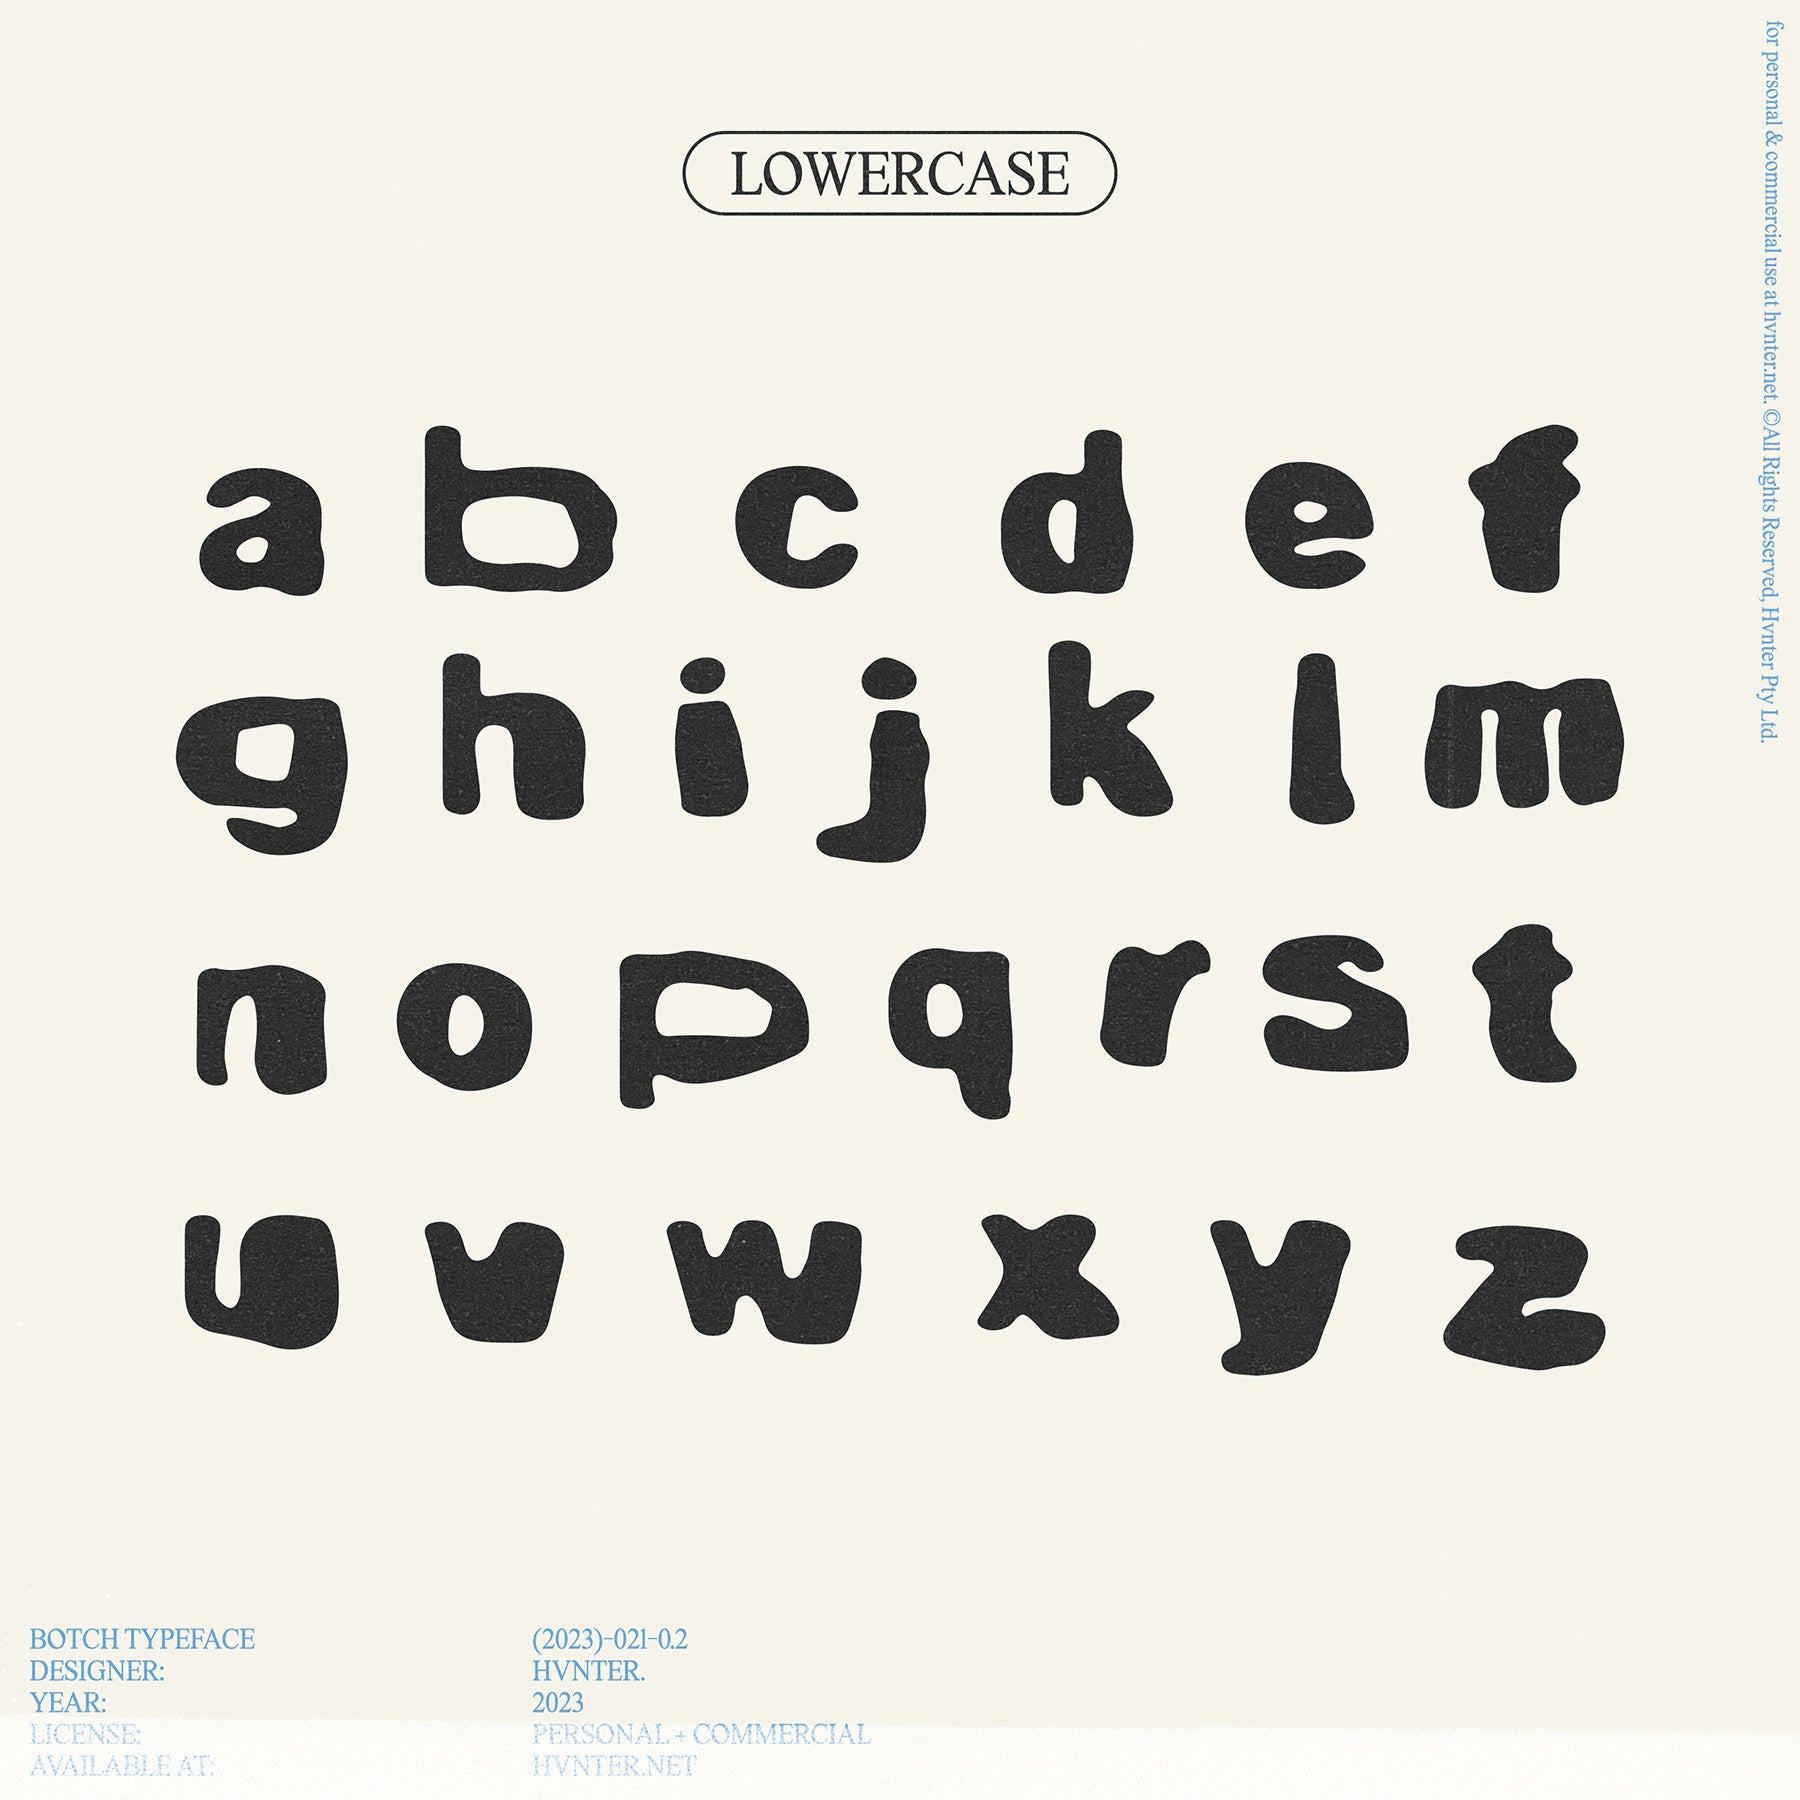 Botch Typeface